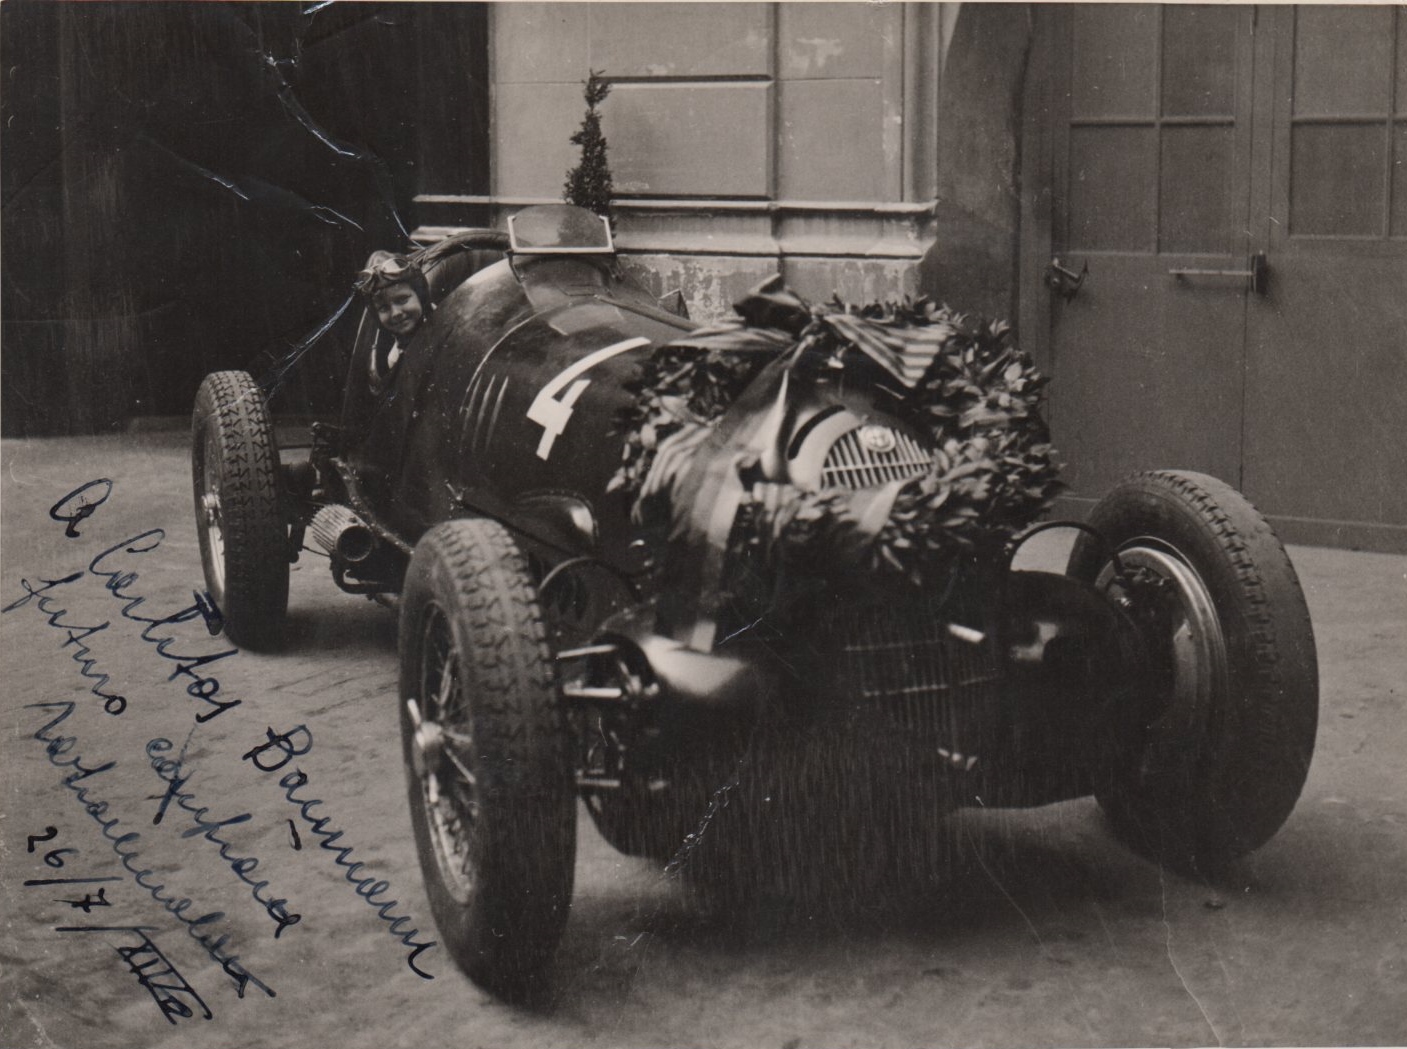 NUVOLARI TAZIO: (1892-1953) Italian Motor Racing Driver whom Ferdinand Porsche described as 'the